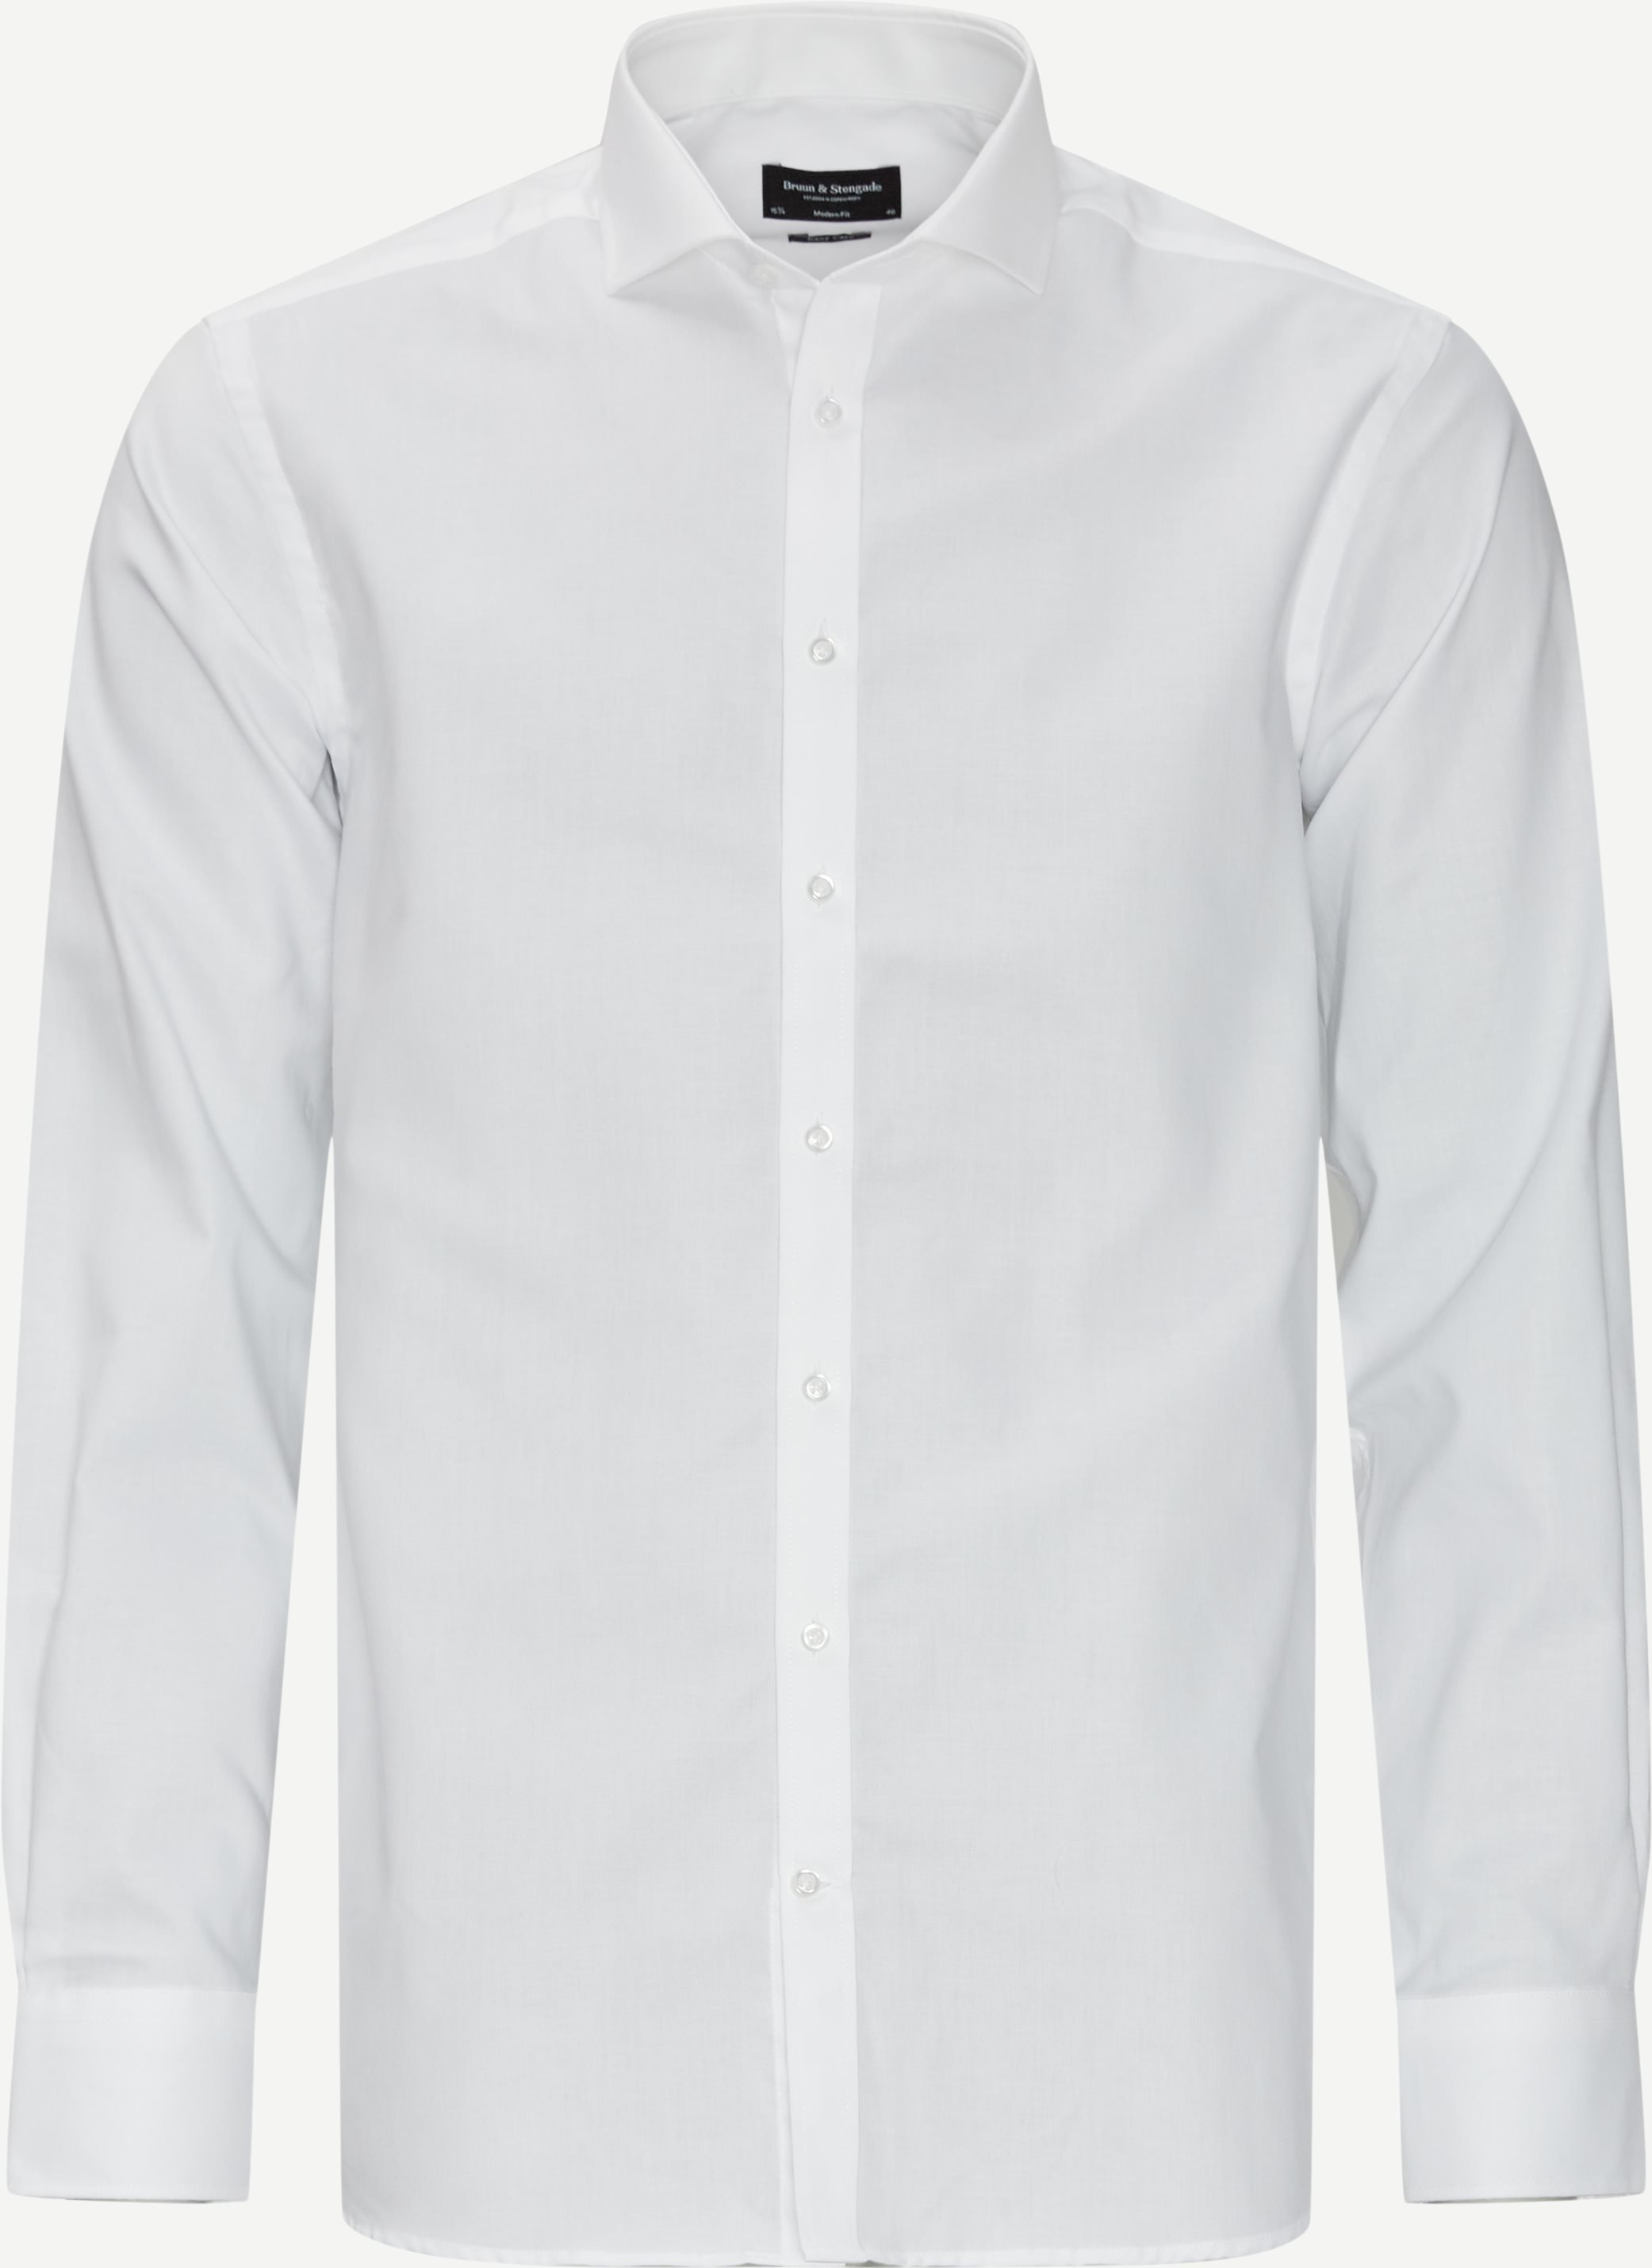 Shirts - Modern fit - White